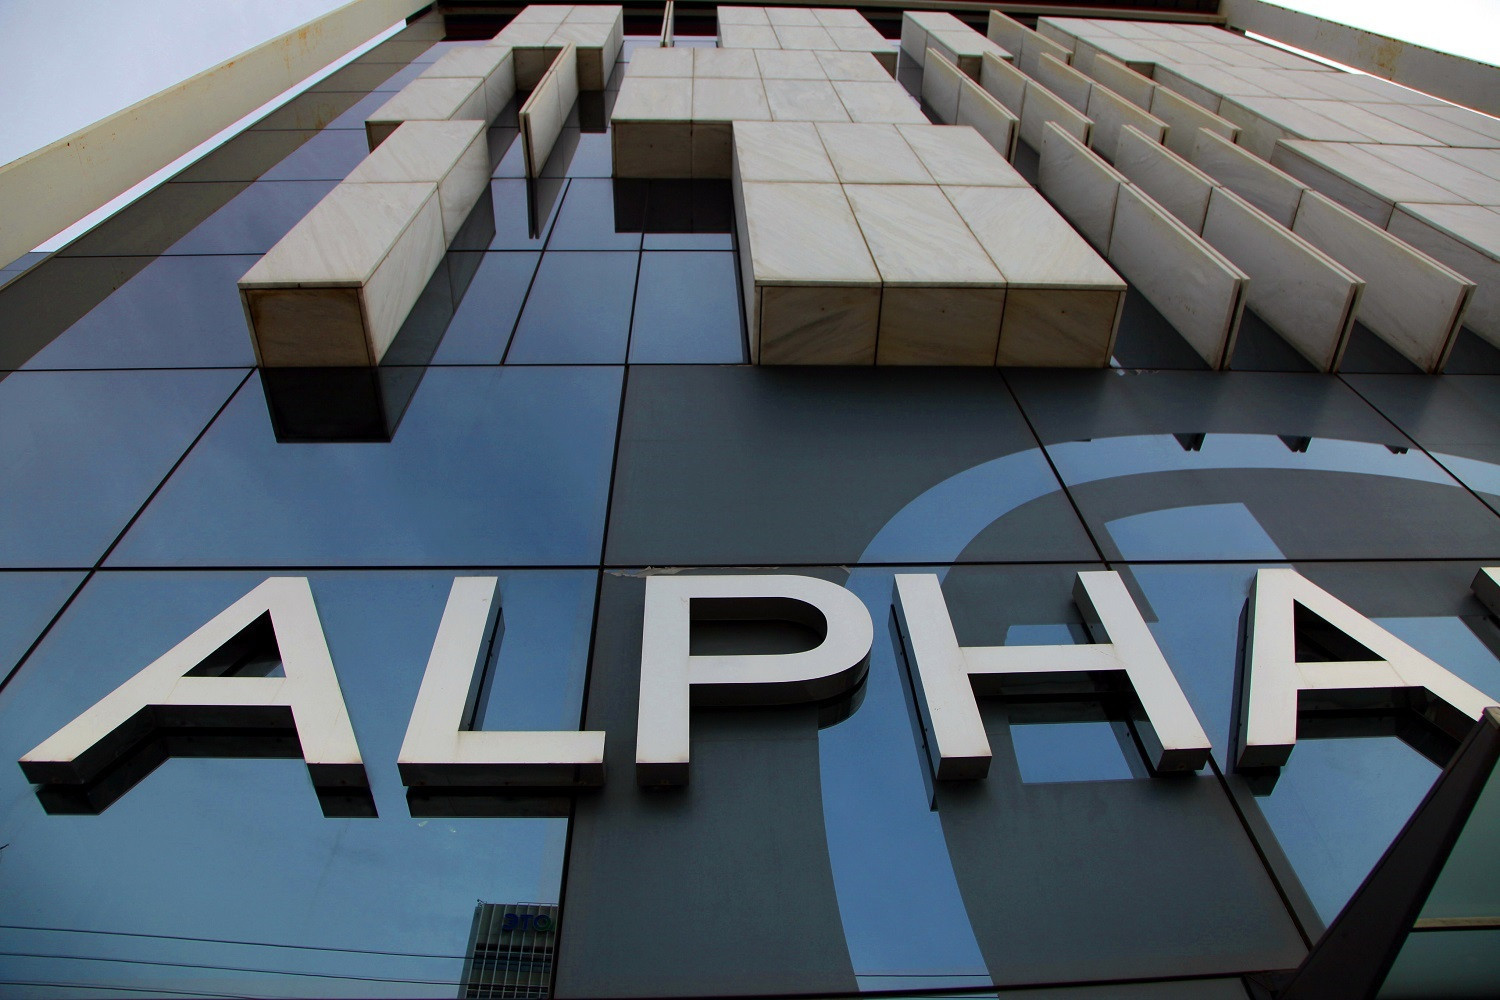 Alpha Bank: Αναστολή καταβολής δόσεων στεγαστικών, καταναλωτικών δανείων και καρτών